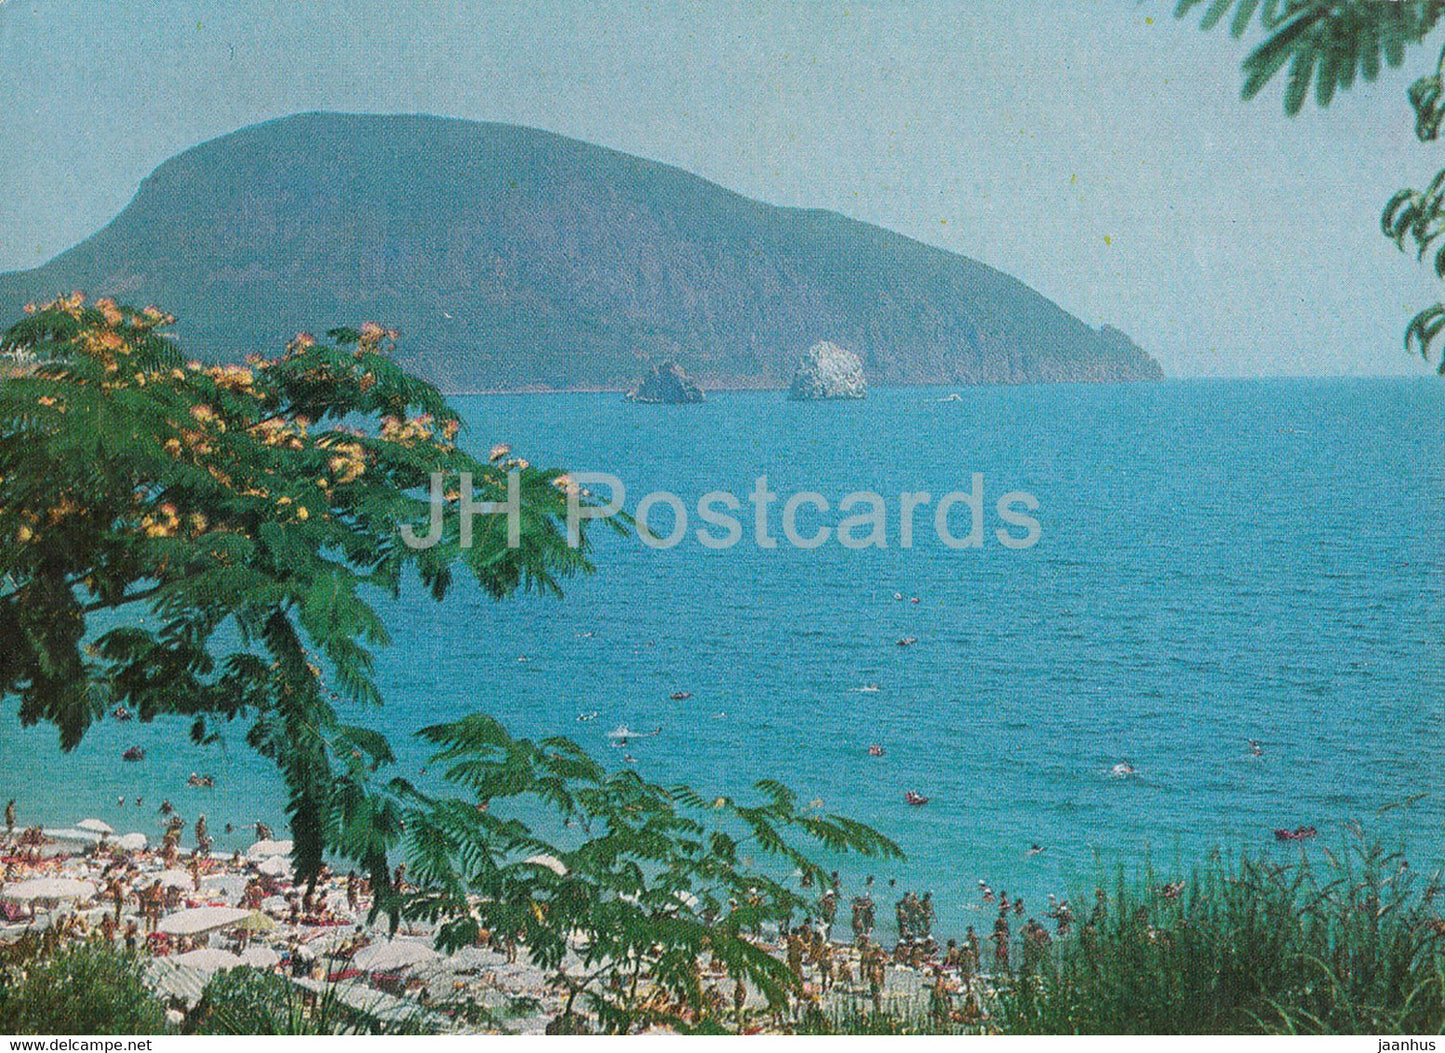 Crimea - Gurzuf - Medved (Bear) mountain - AVIA - postal stationery - 1975 - Ukraine USSR - unused - JH Postcards